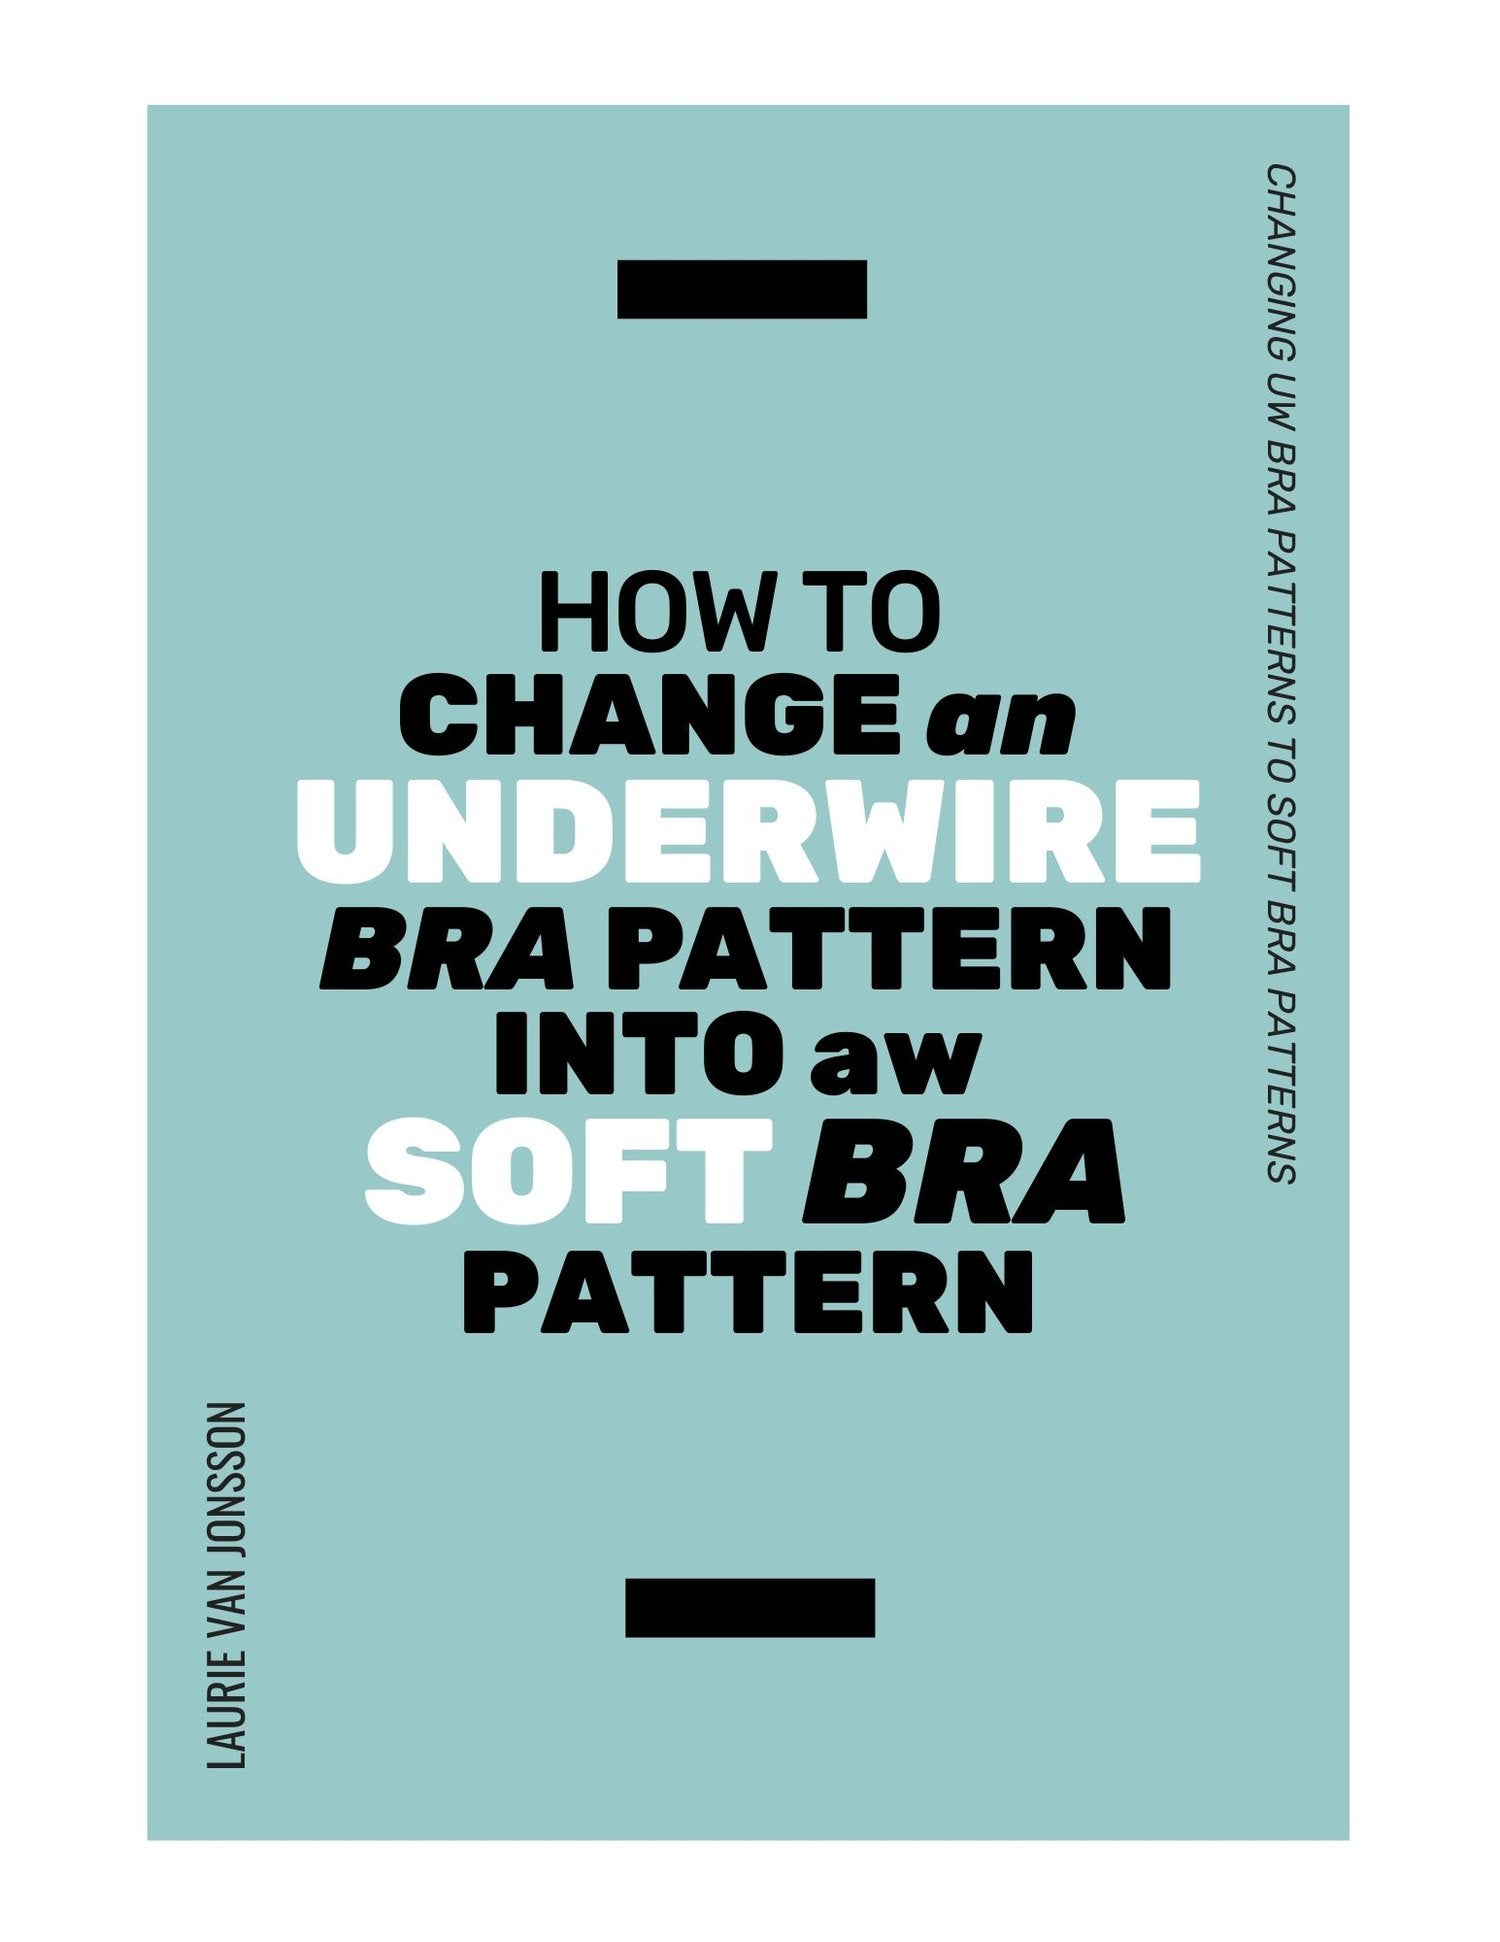 EBook: Van Jonsson Design- How to change an Underwire bra pattern into a soft bra pattern